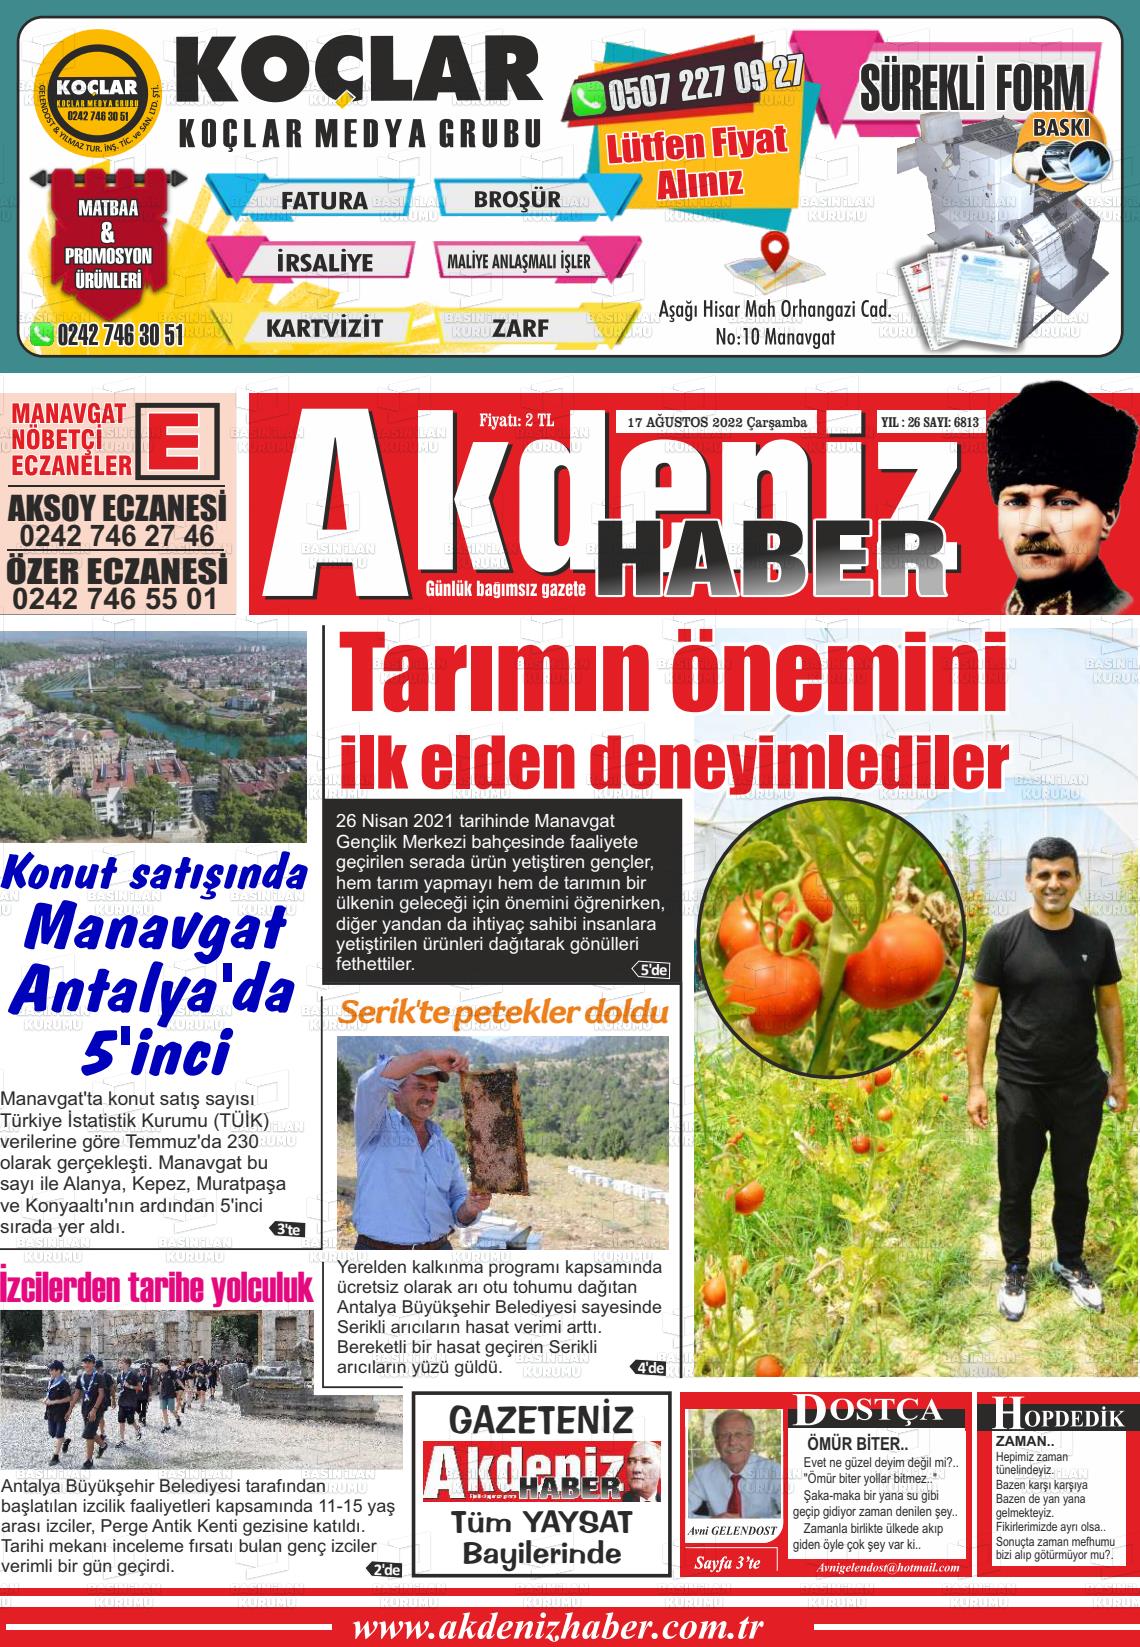 17 Ağustos 2022 Akdeniz Haber Gazete Manşeti